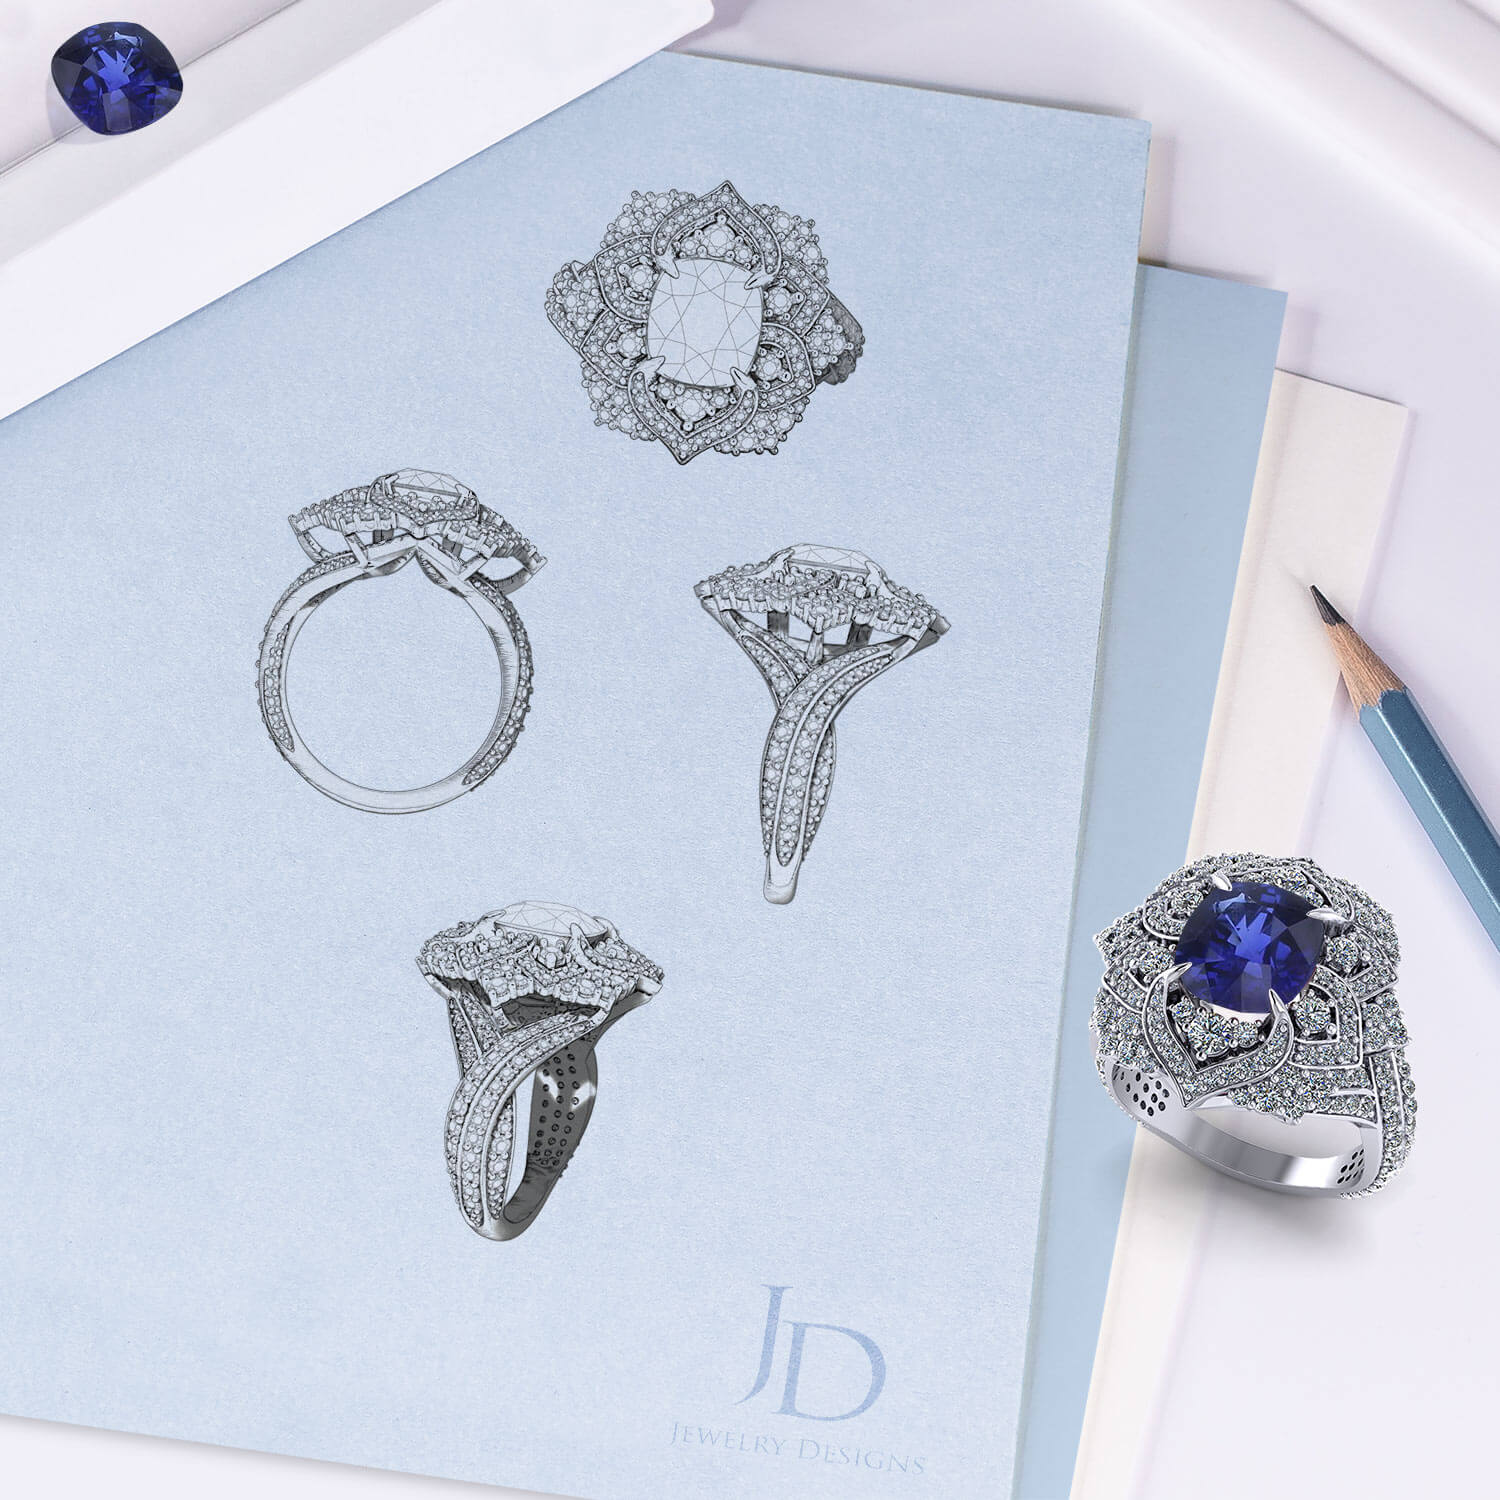 Design Your Own Gemstone Ring